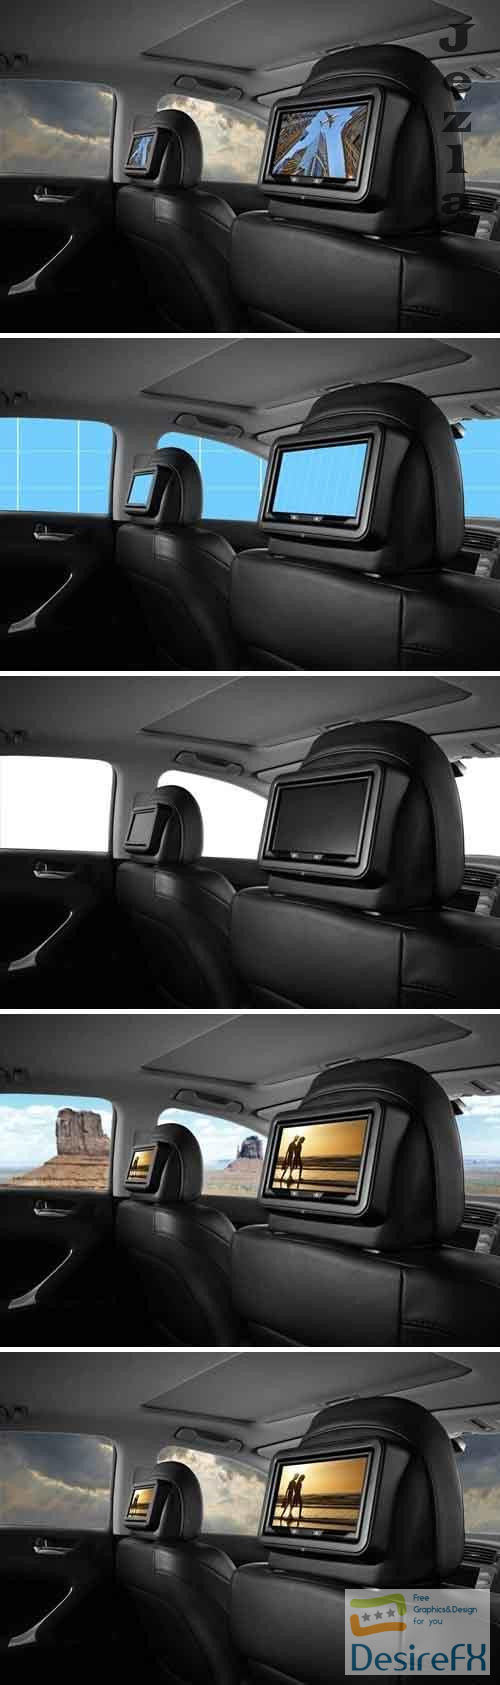 Leather interior-Car-Mockup - JVSM87A